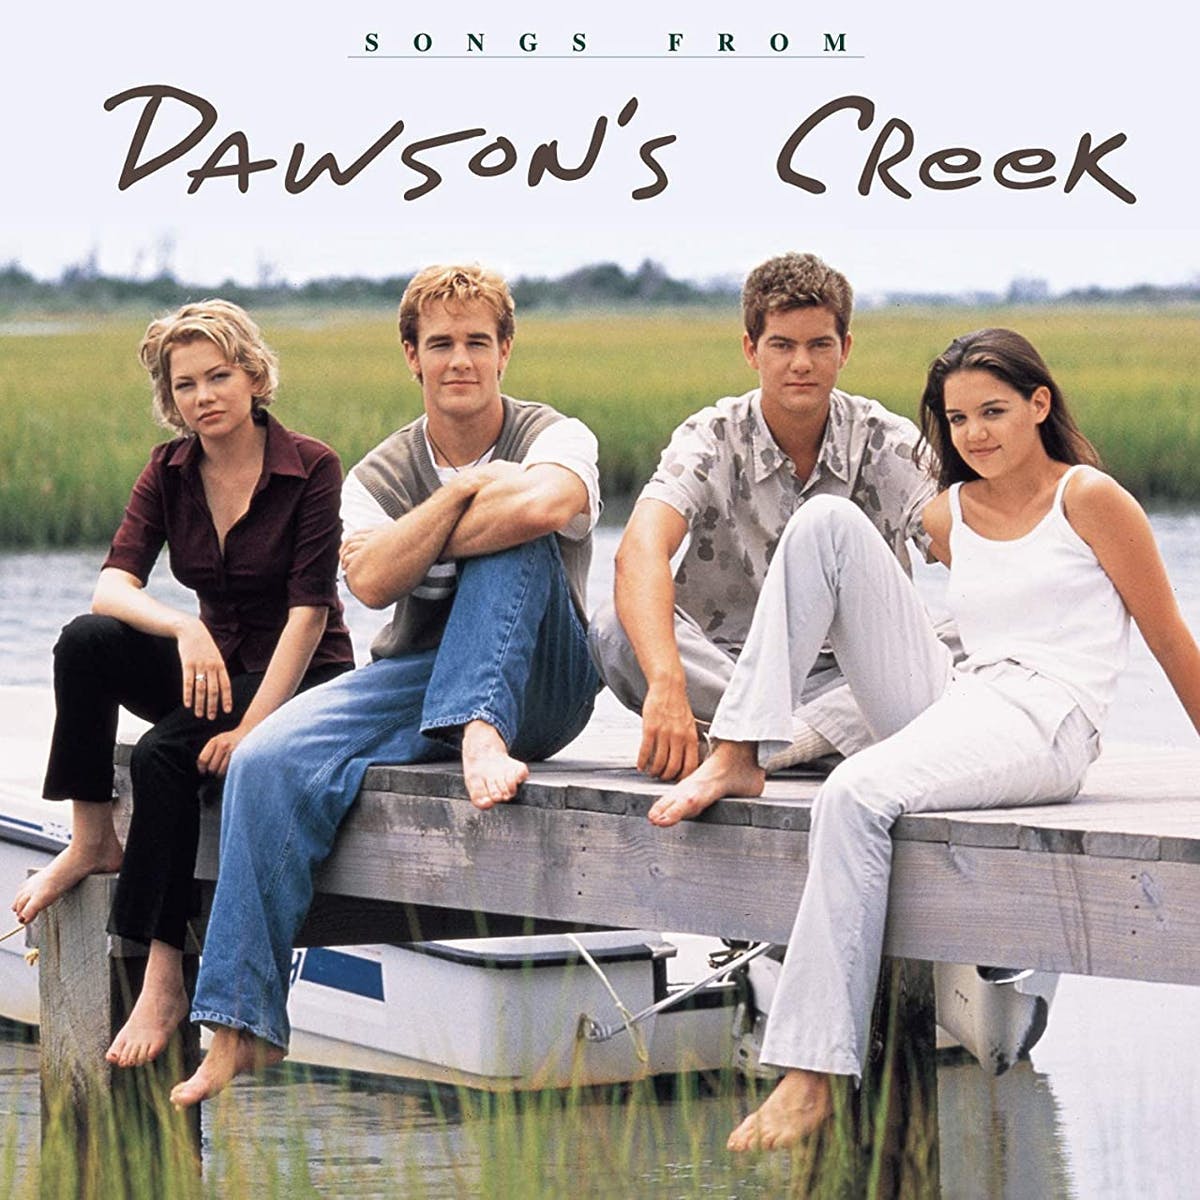 A Dawson's Creek Reunion Joshua Jackson Says It's a Bad Idea!